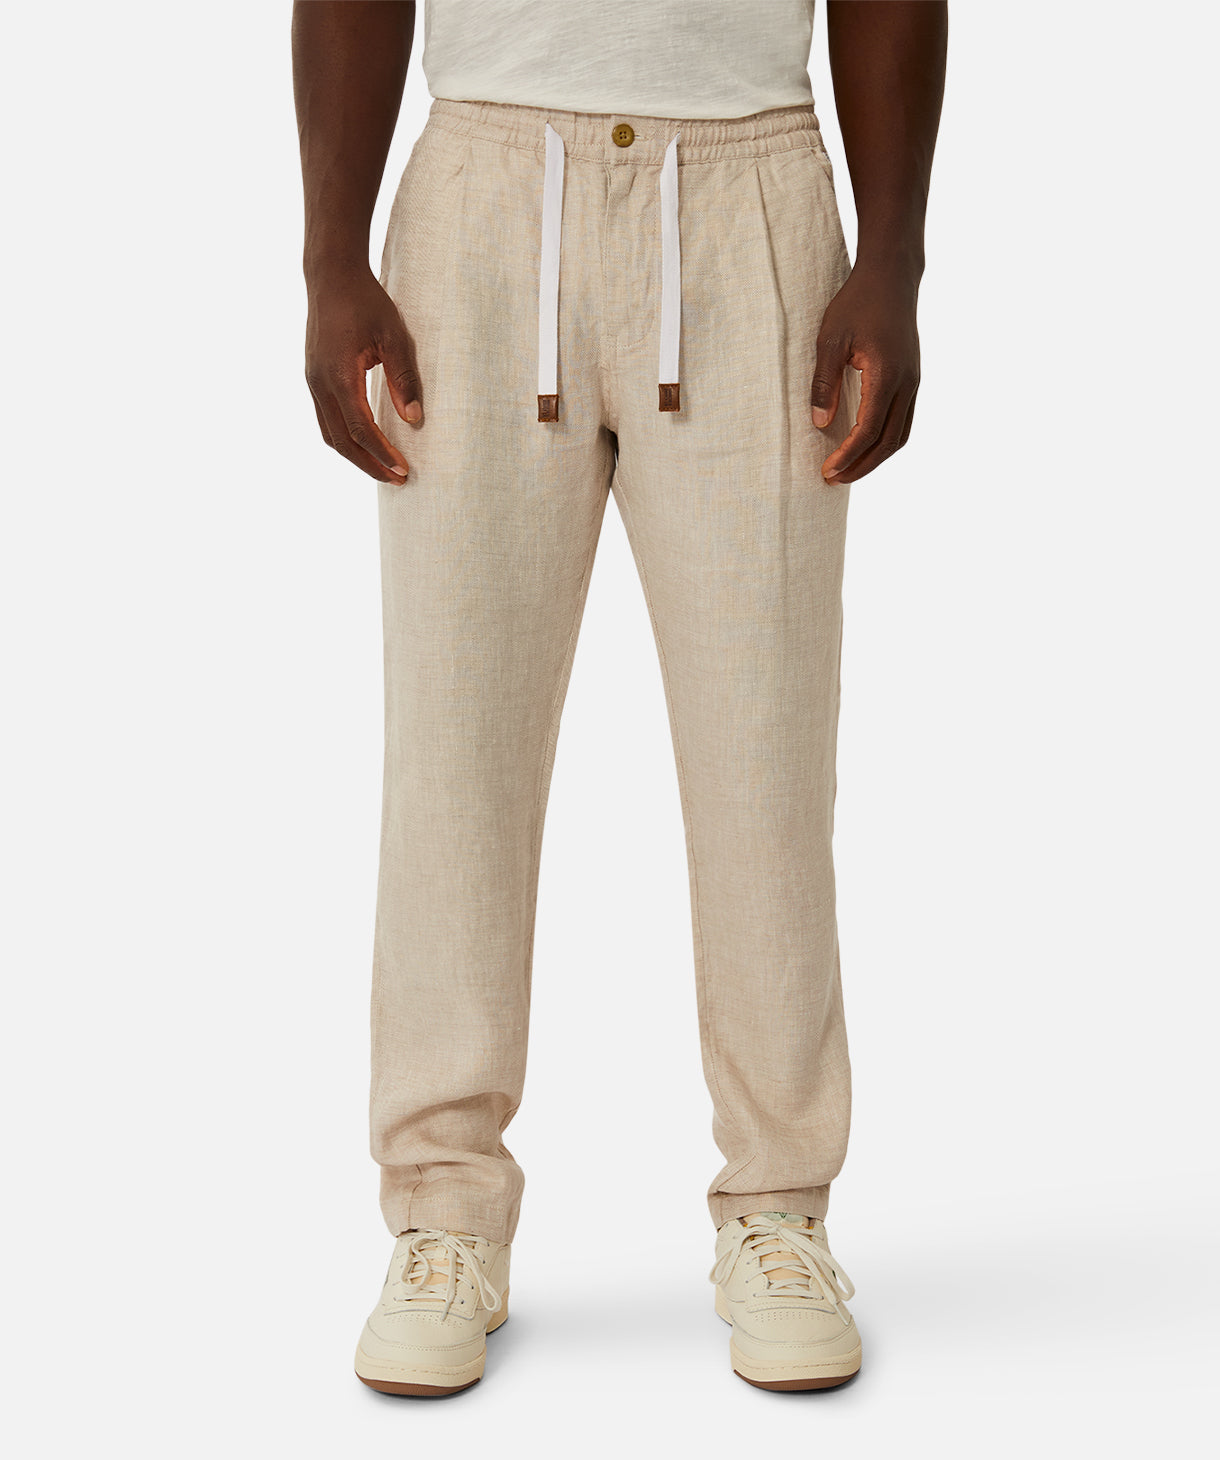 iWoo Mens Cotton Linen Drawstring Pants Elastic Waist Casual Jogger Yoga  Pants | eBay